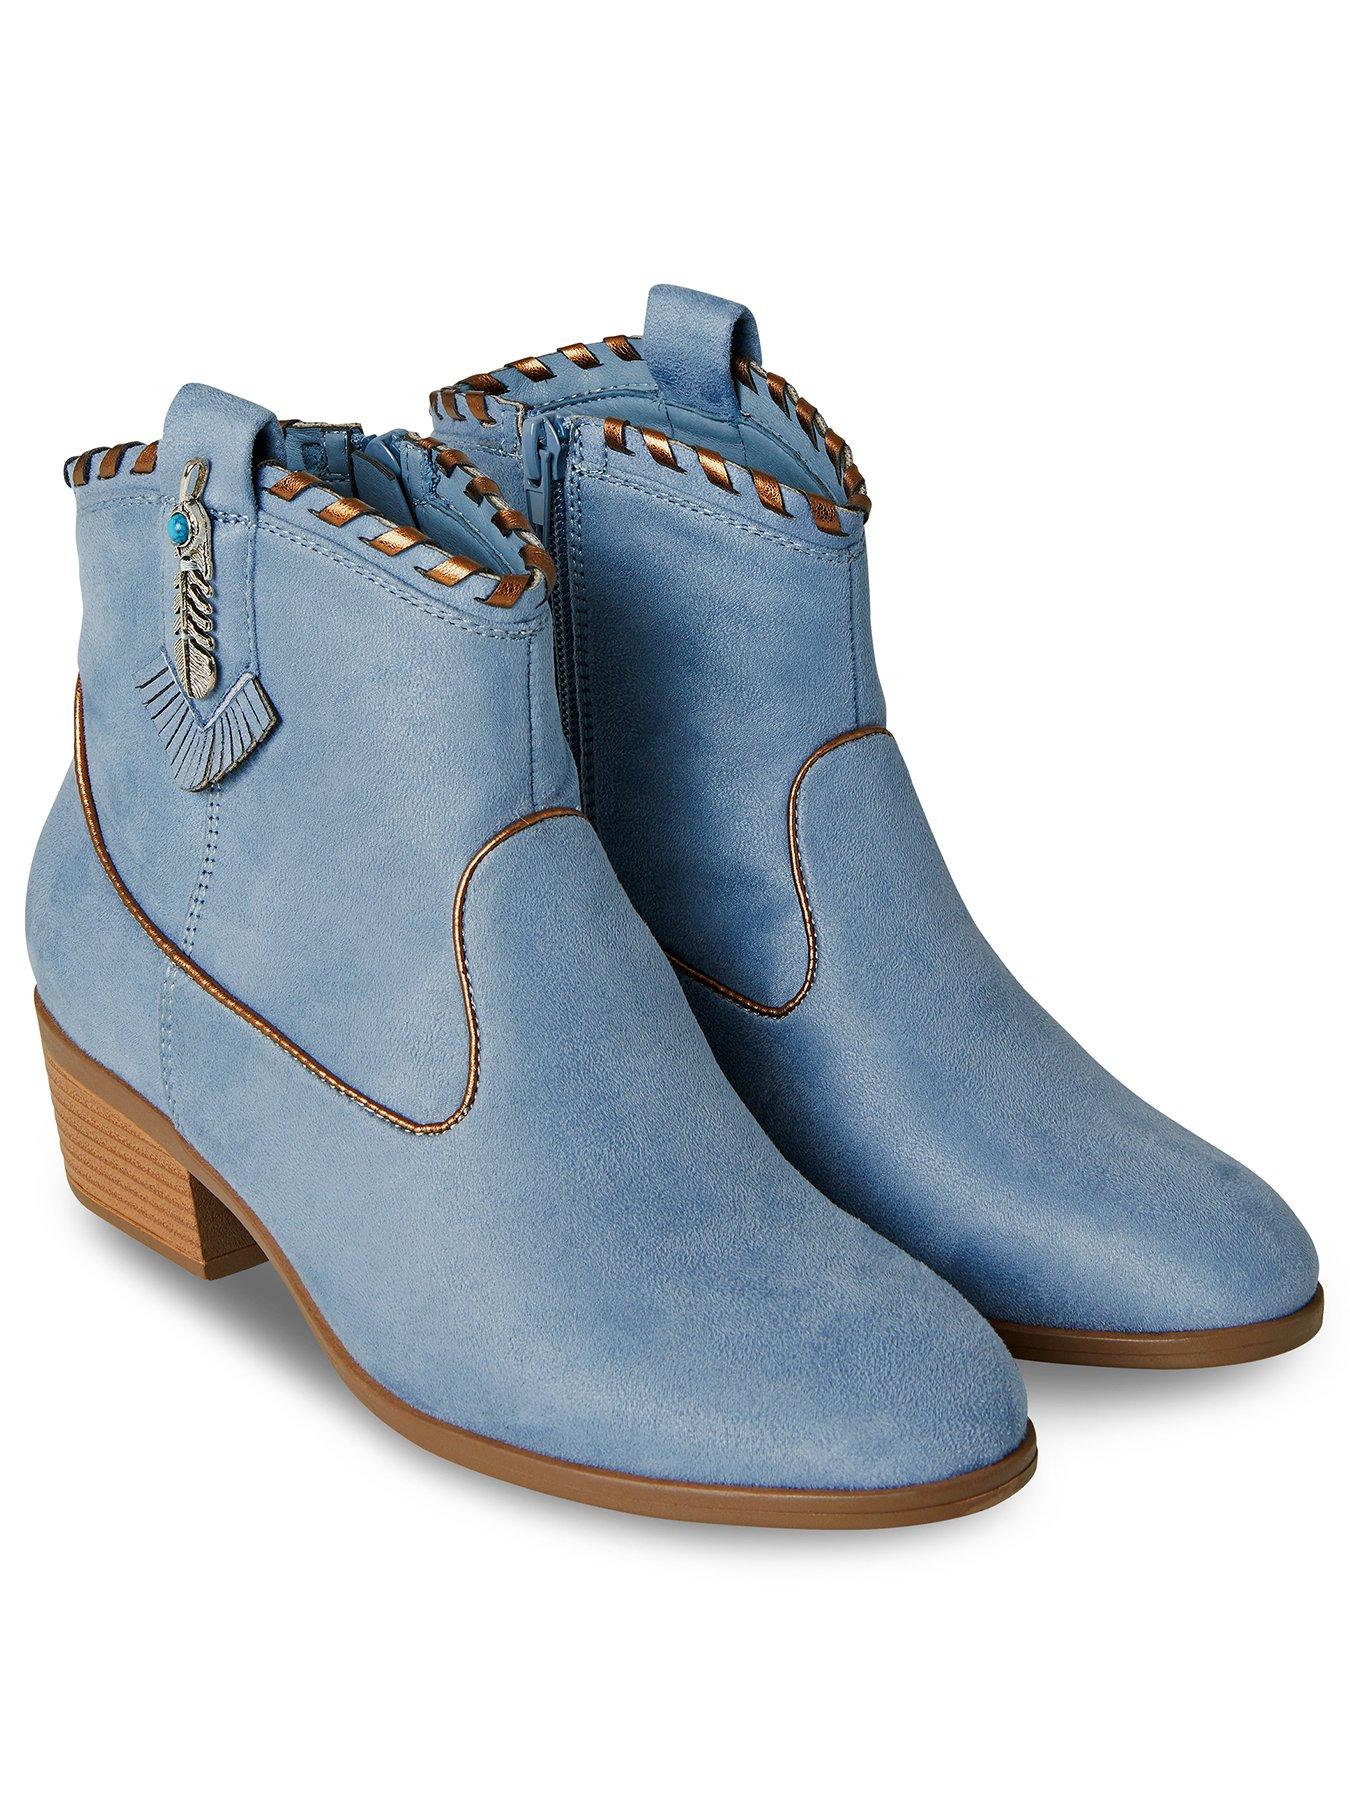 blue shoe boots uk